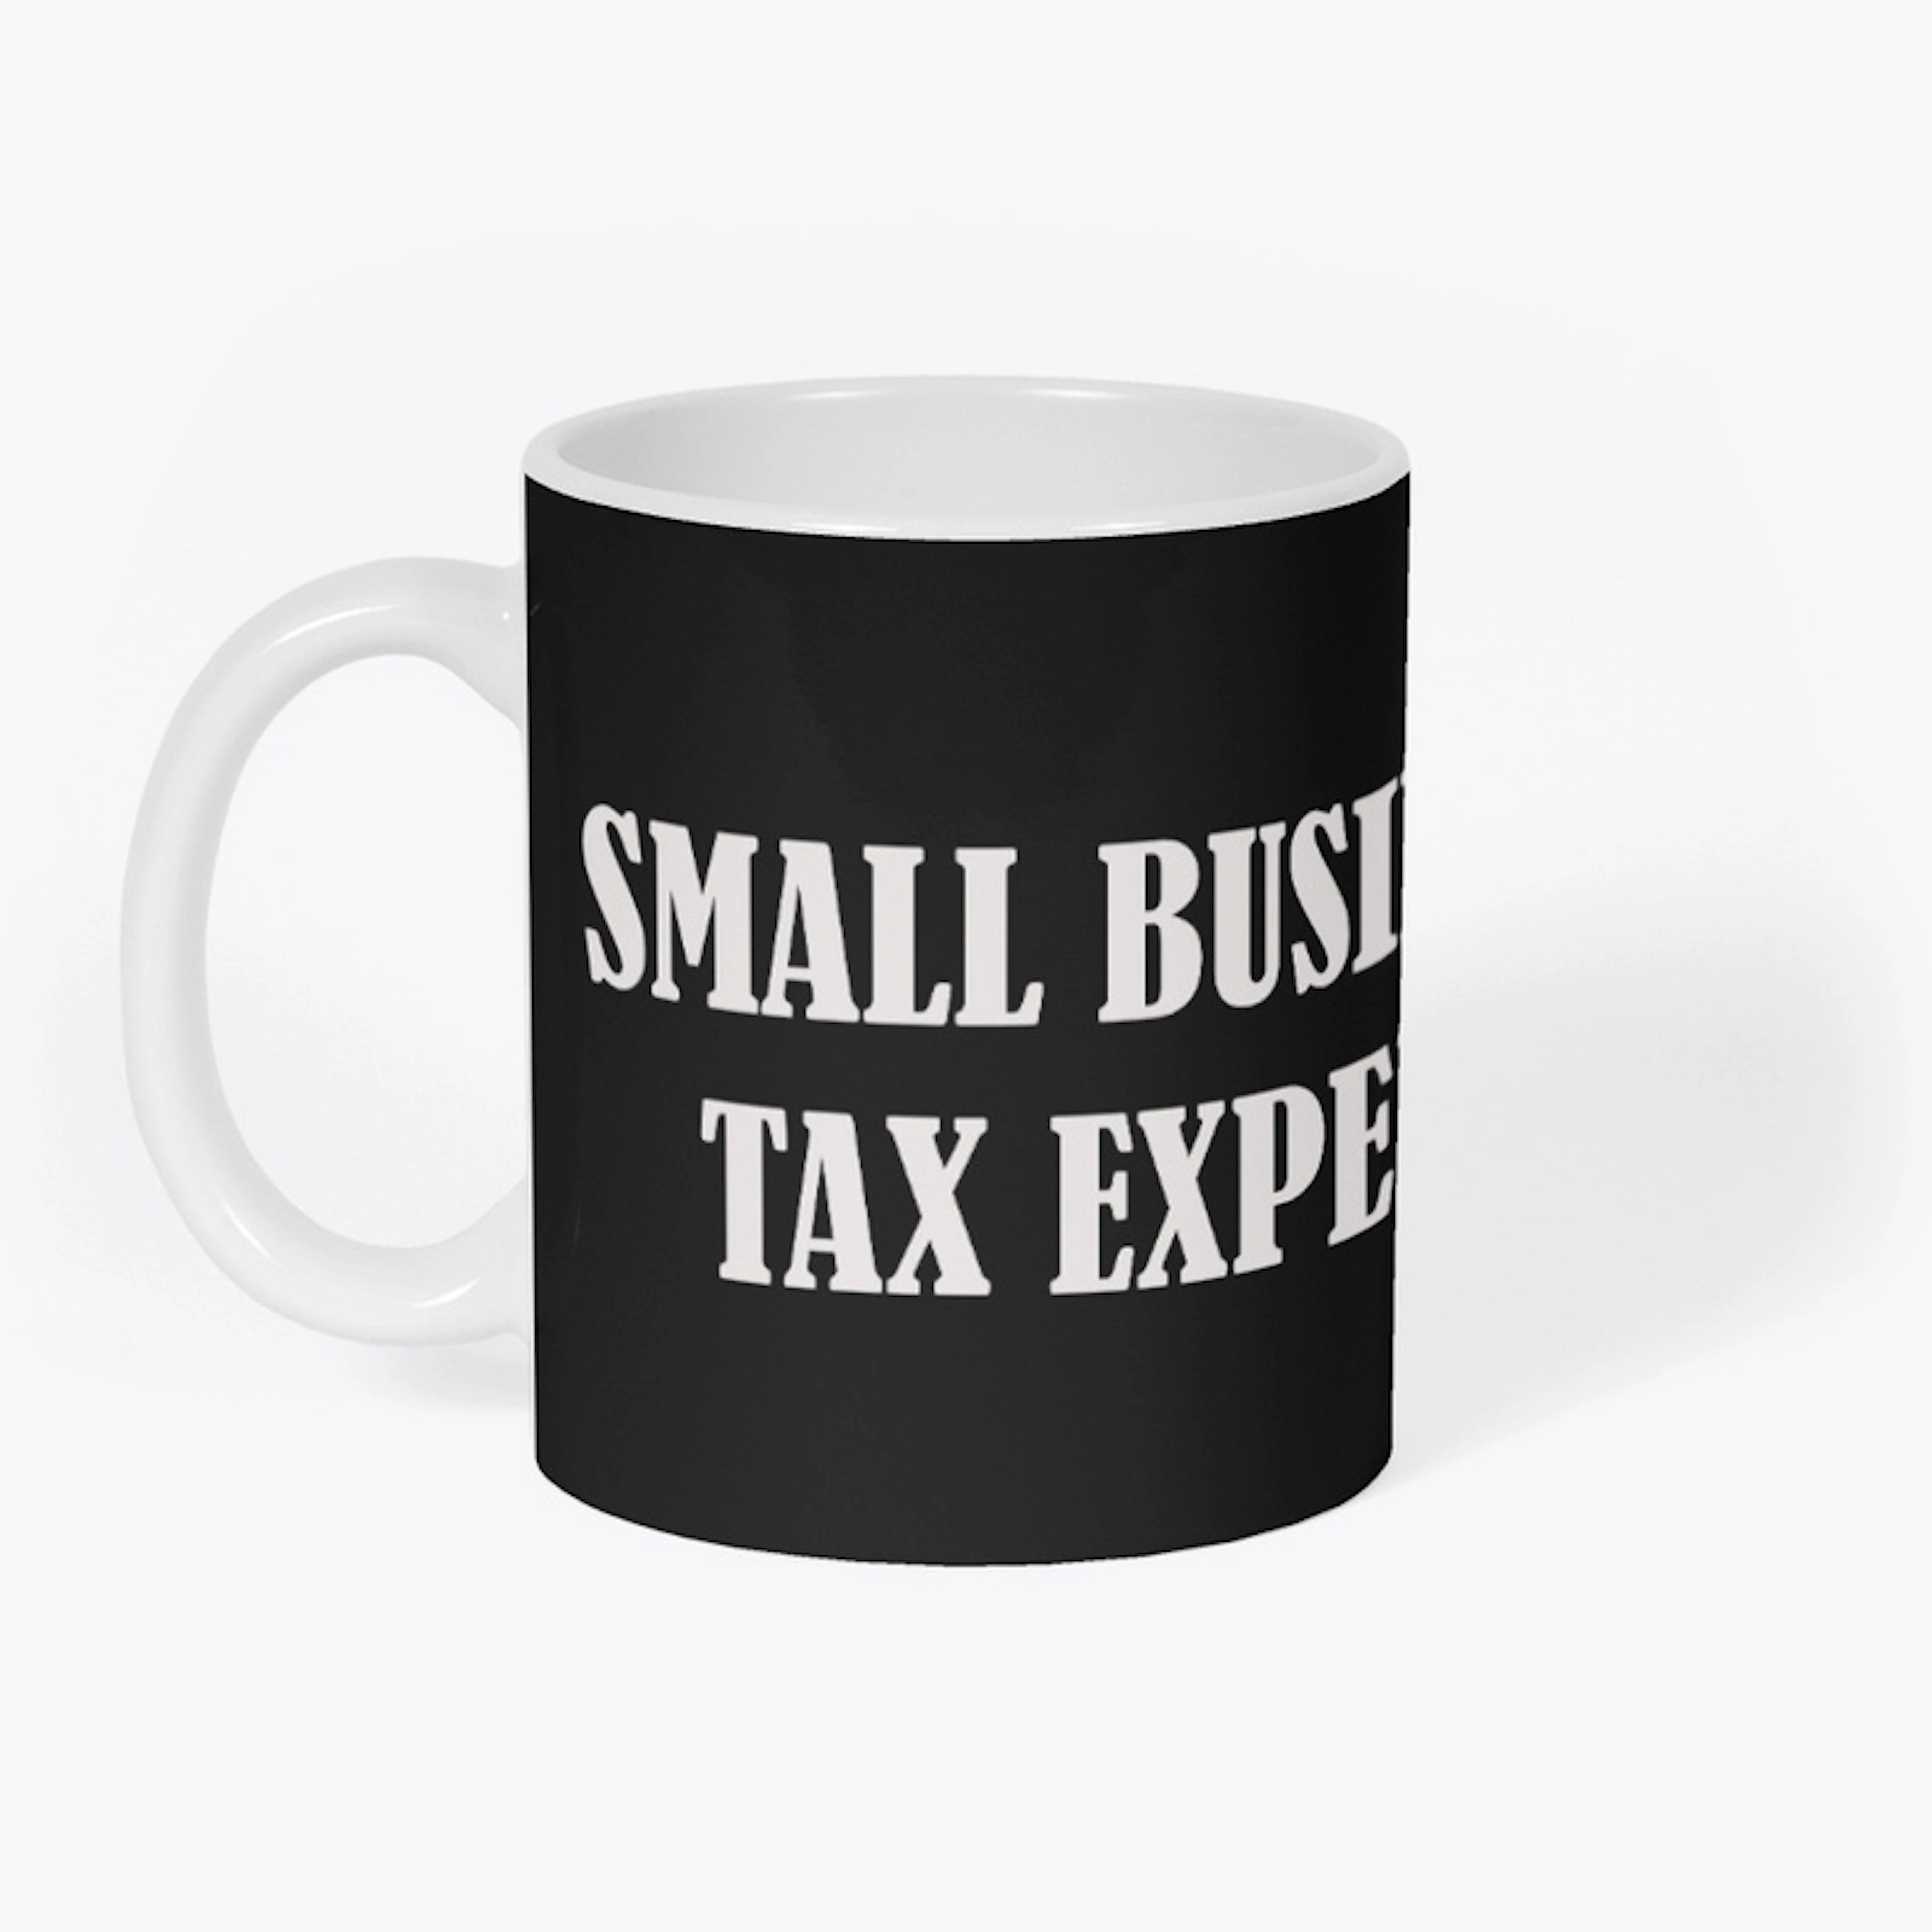 Small Business Tax Expert